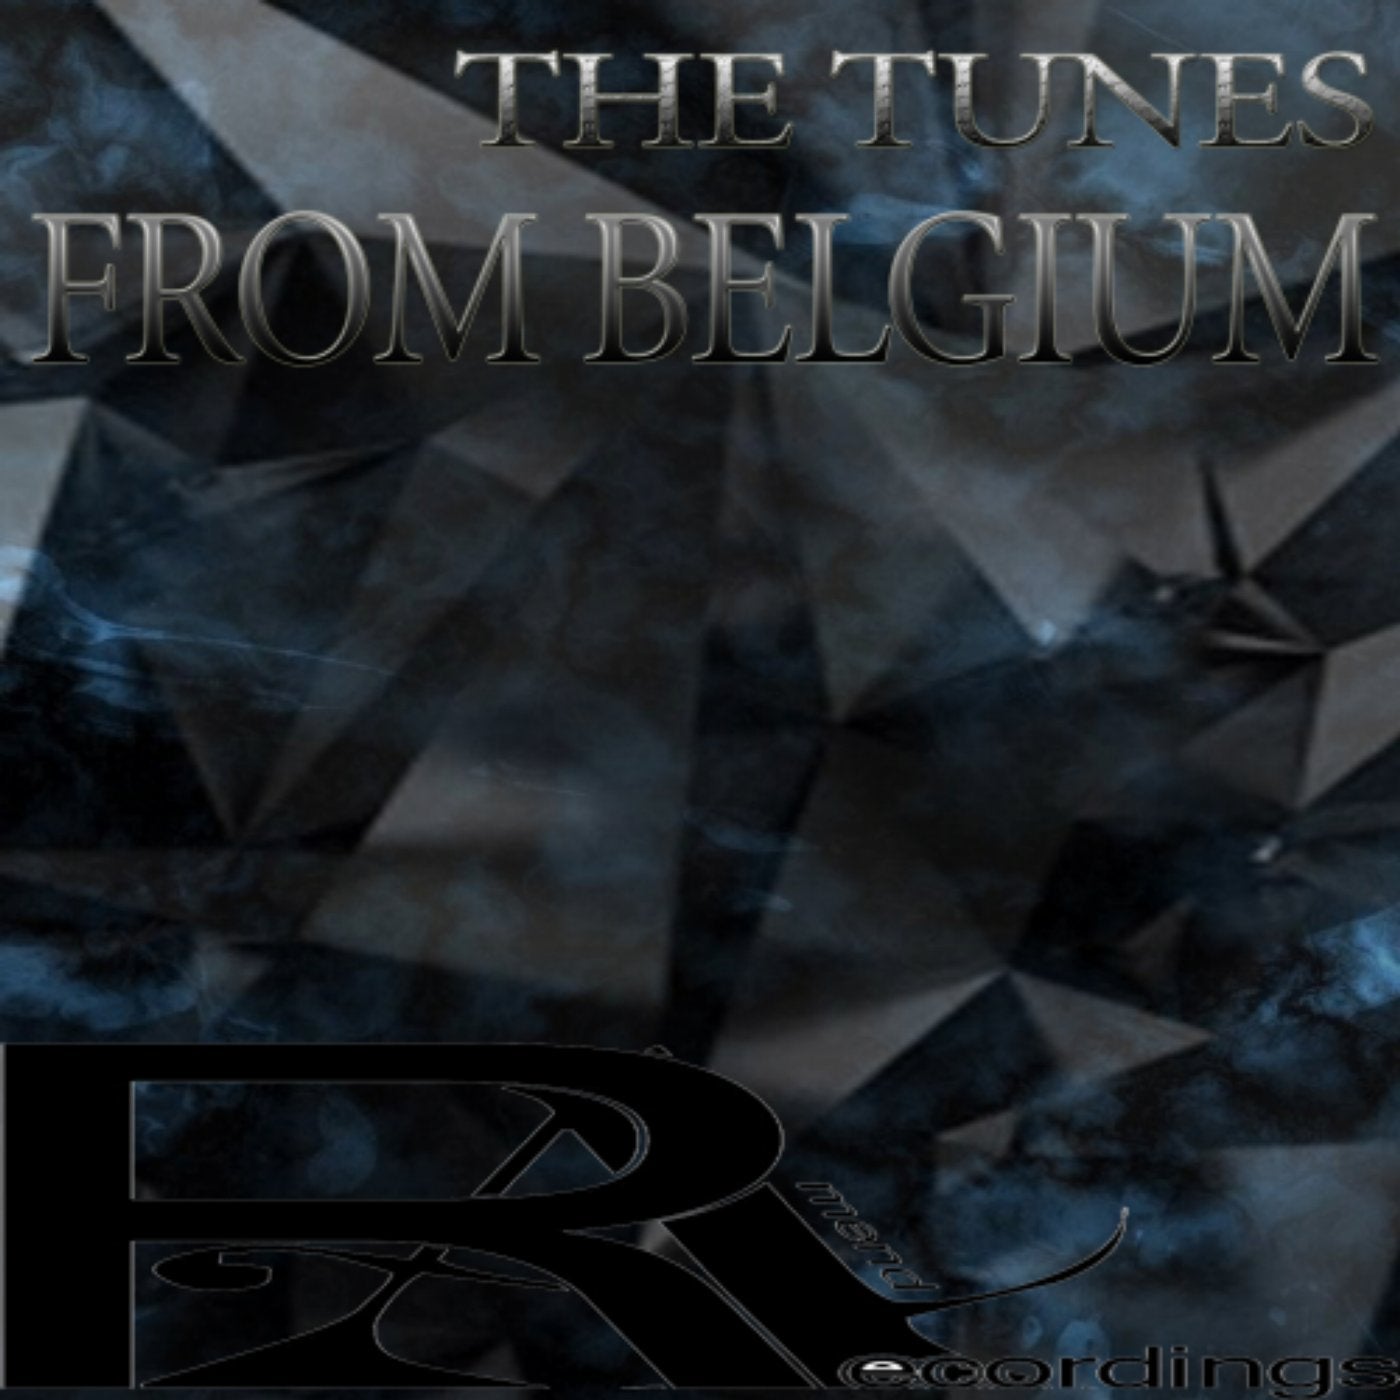 THE TUNES FROM BELGIUM